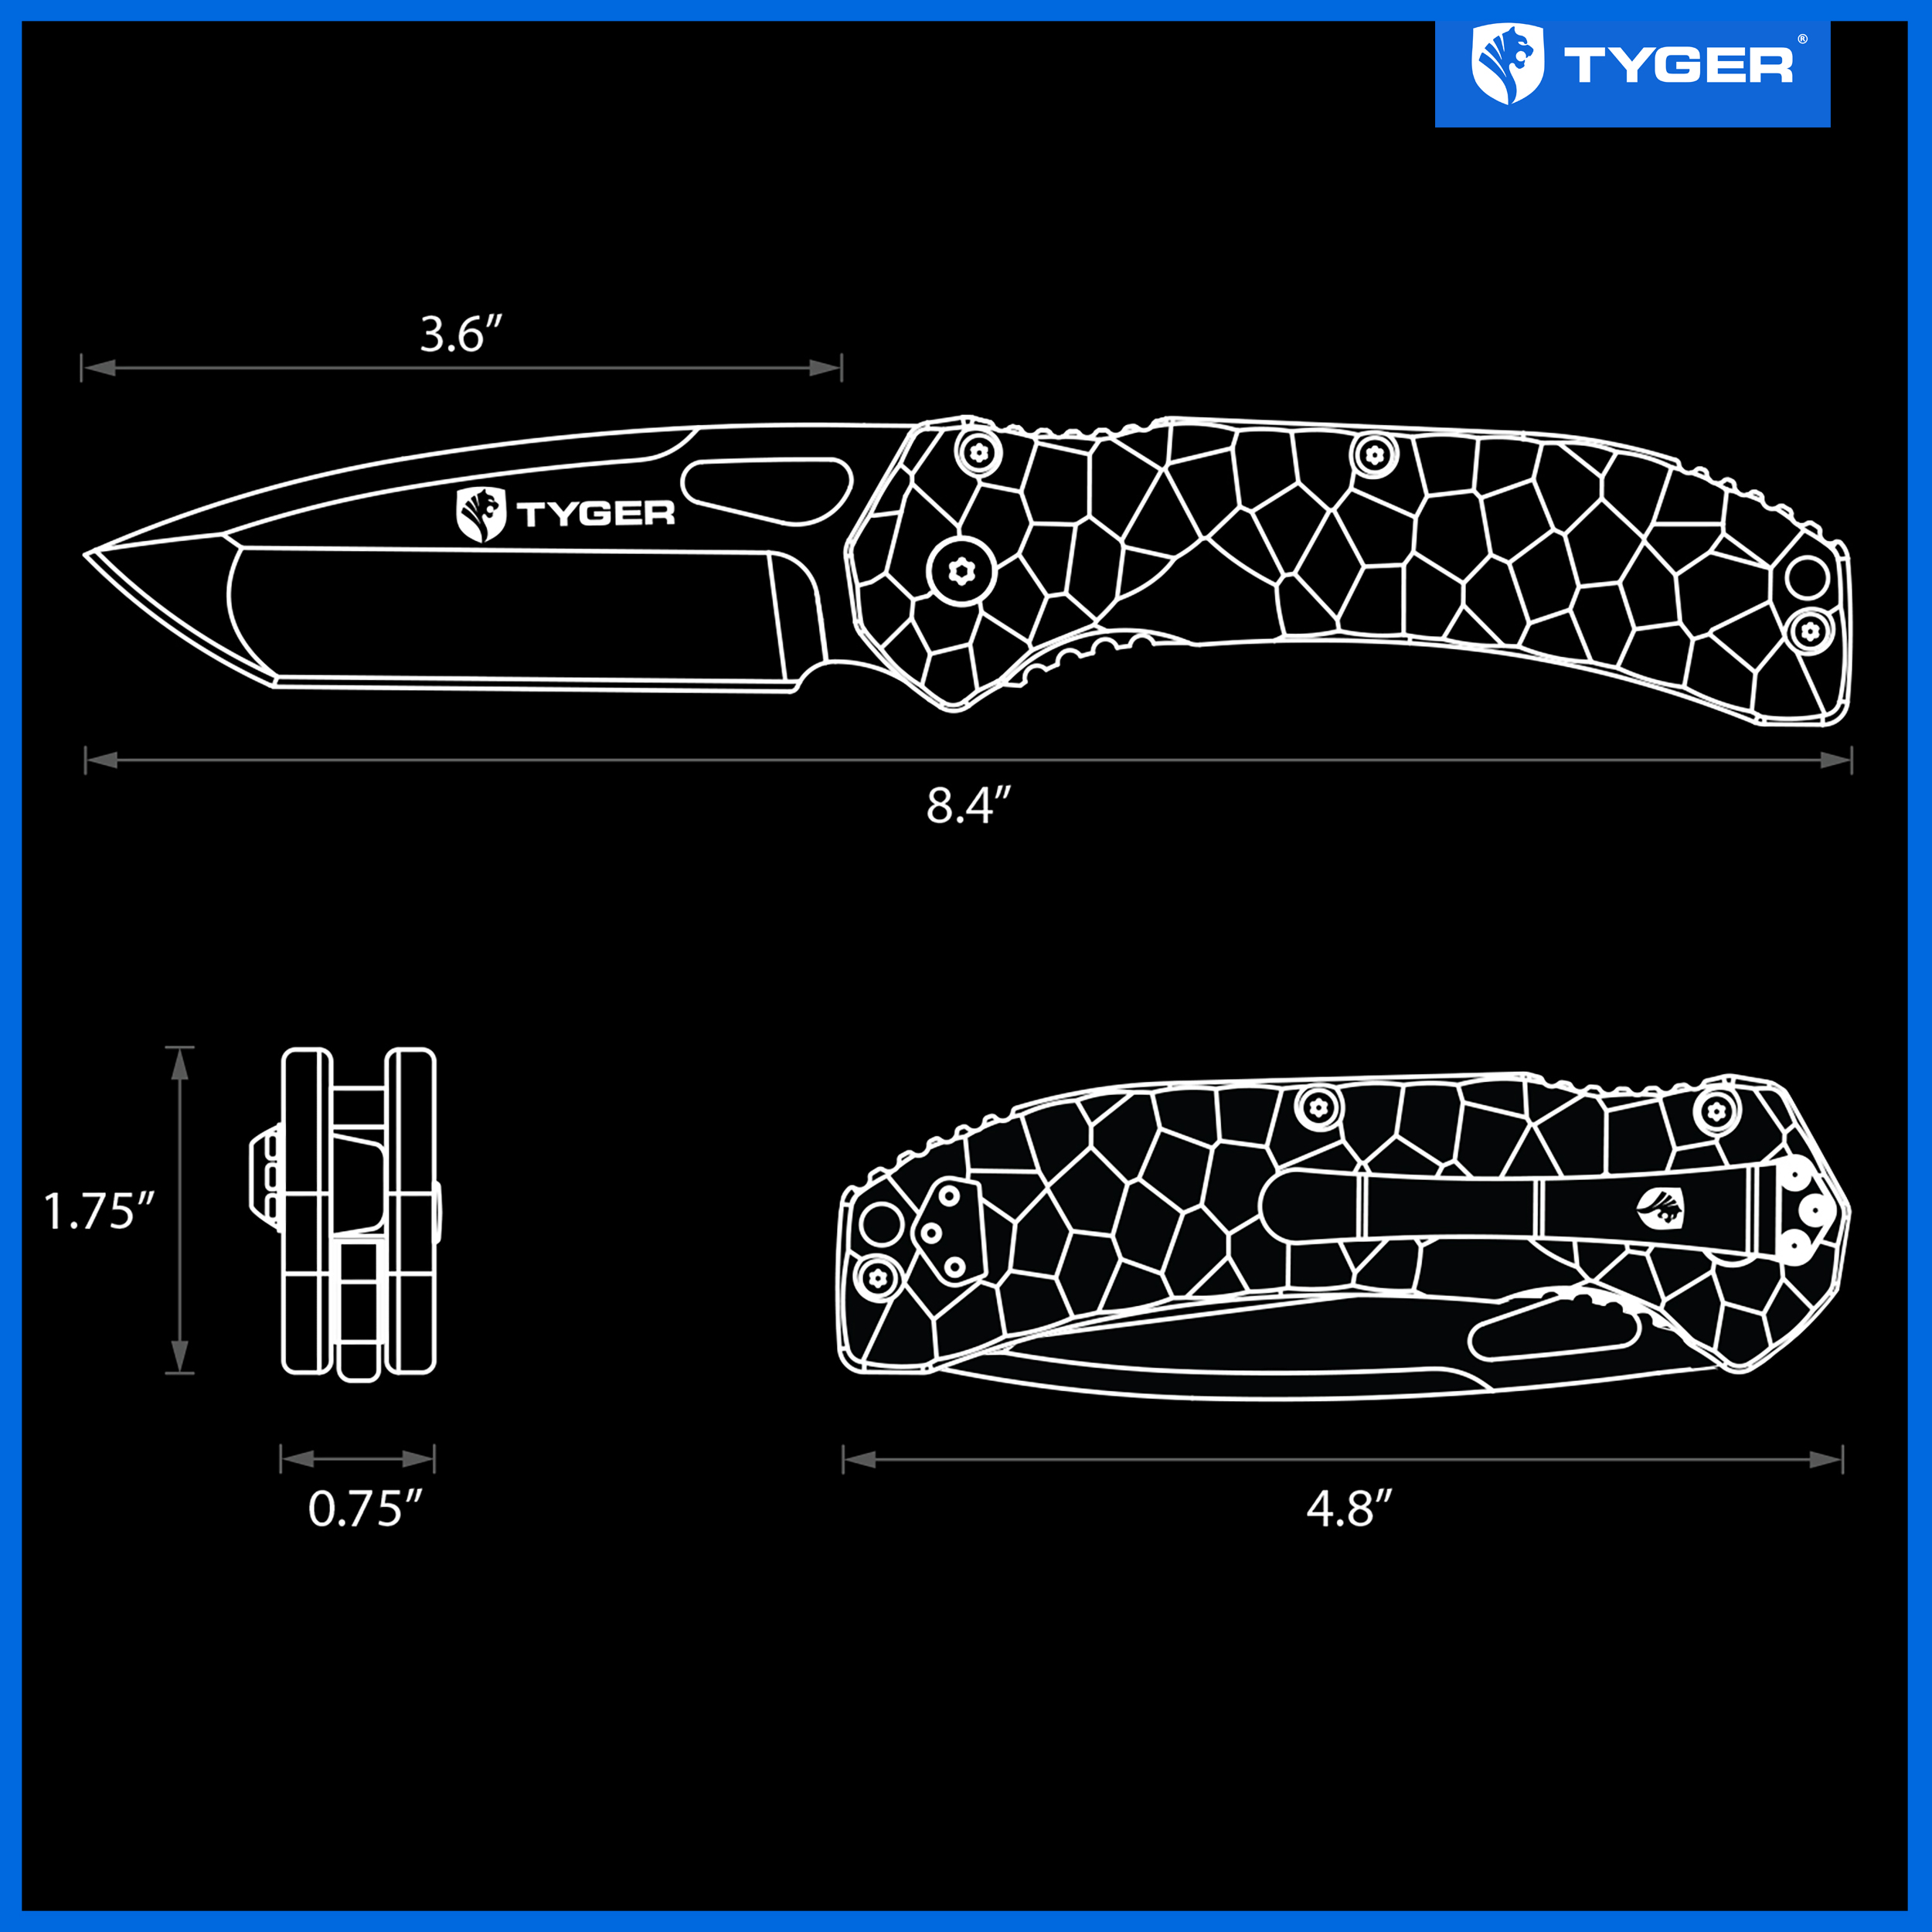 Tyger K4 EDC Folding Pocket Knife | AUS-8 Stainless Steel Blade | Black G-10 Handle - TG-KF7A2837